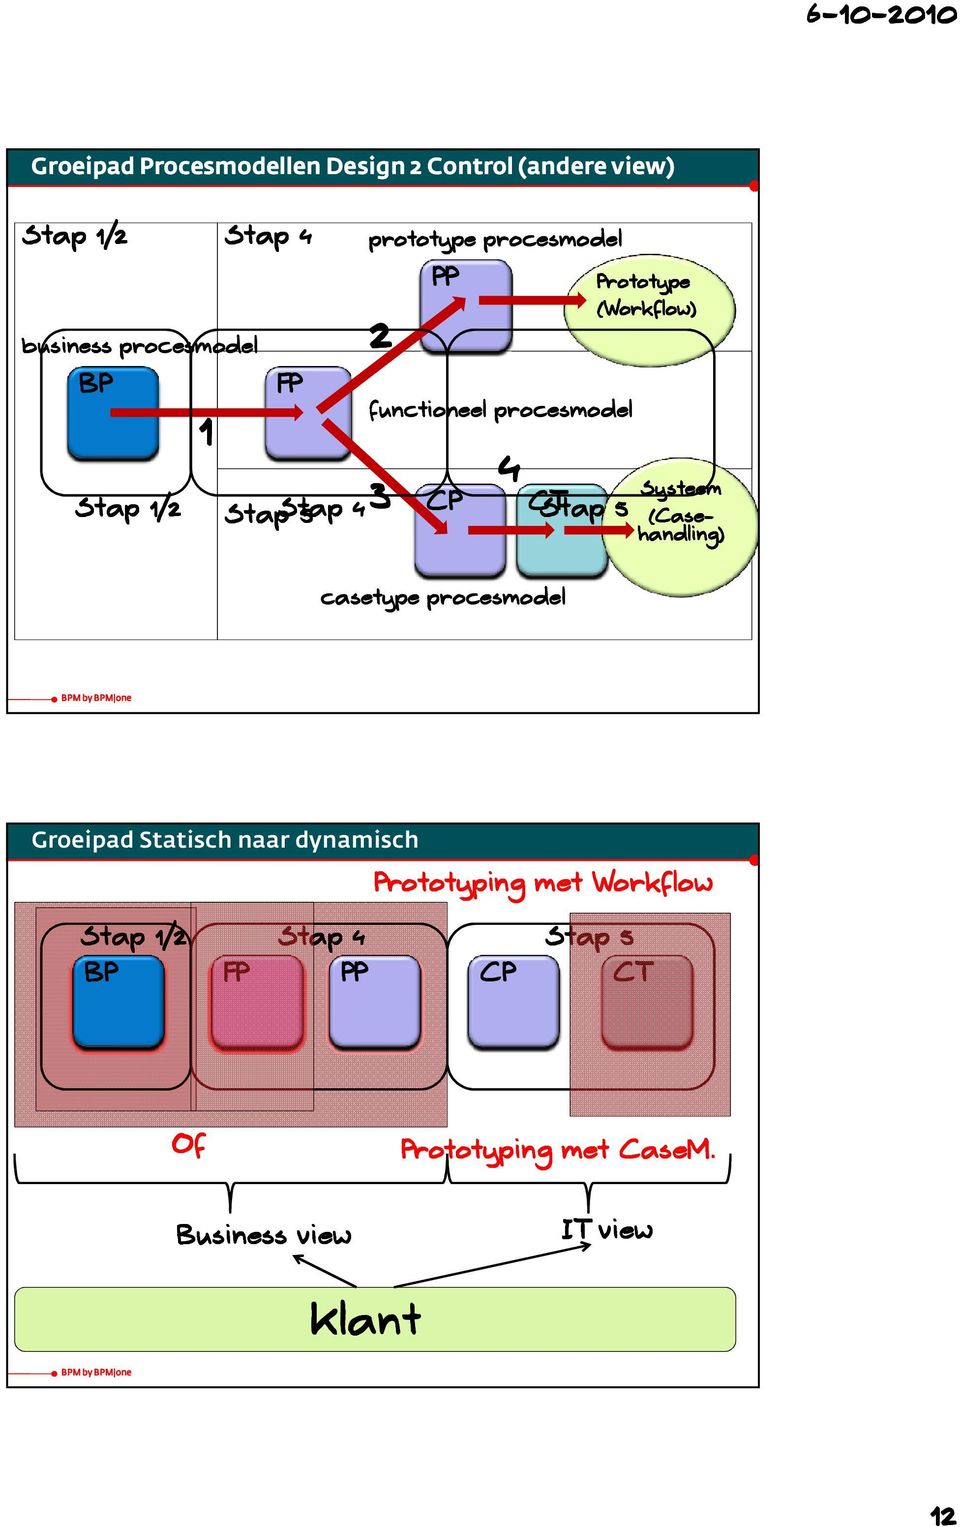 (Workflow Workflow) Systeem (Case Case- handling) casetype procesmodel Groeipad Statisch naar dynamisch